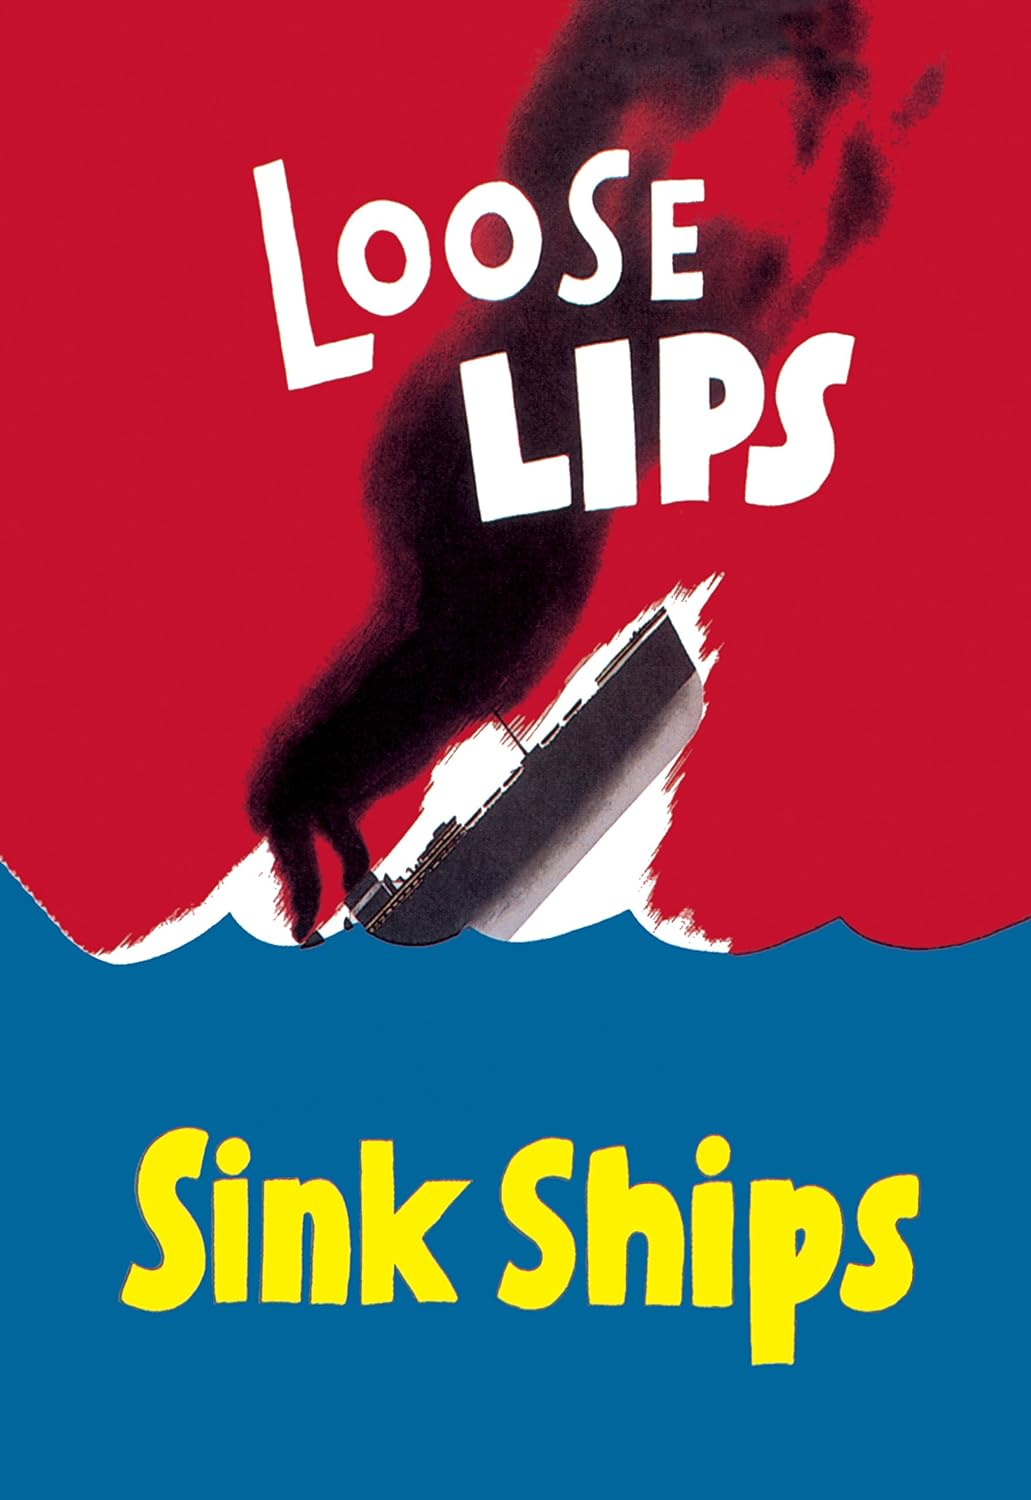 Loose lips sink ships - WWII poster JPP Blank Meme Template